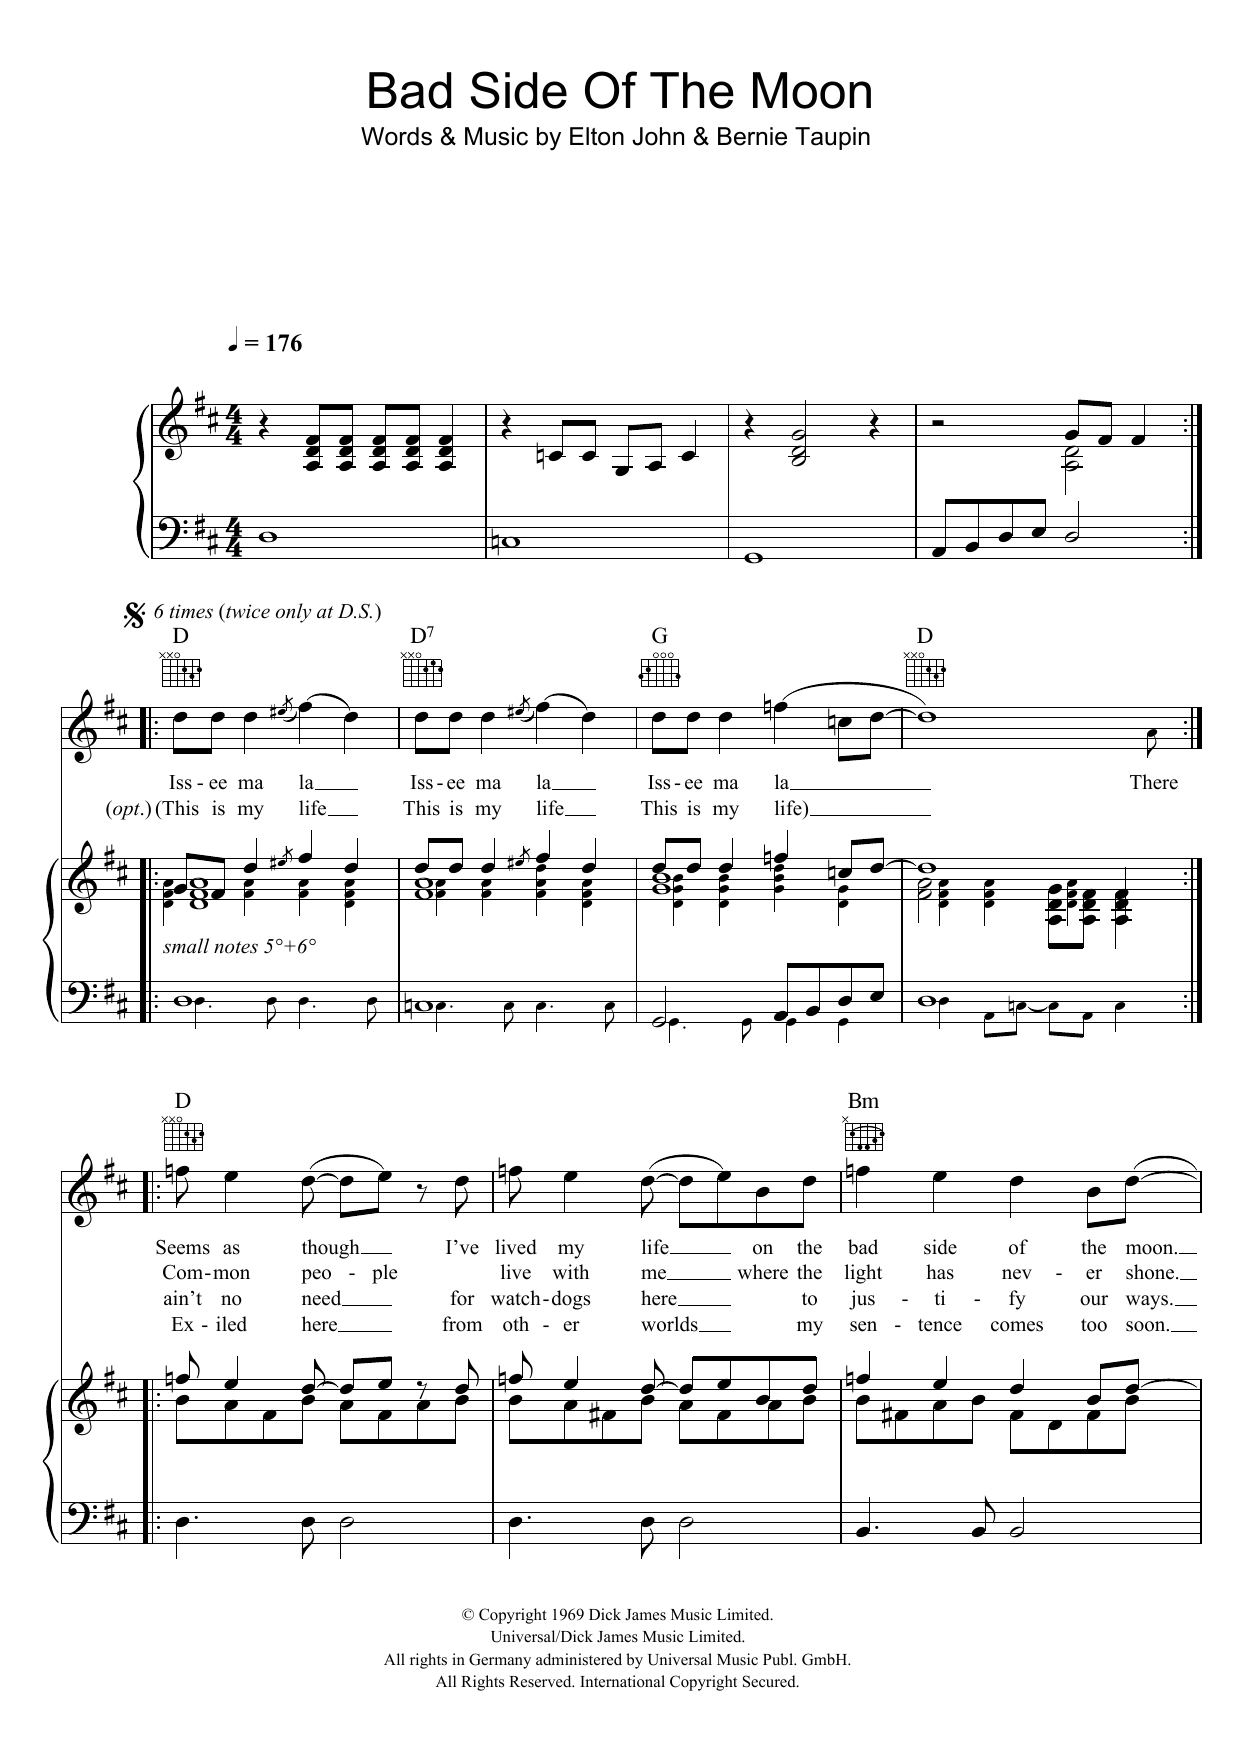 Elton John Bad Side Of The Moon Sheet Music Notes & Chords for Keyboard - Download or Print PDF